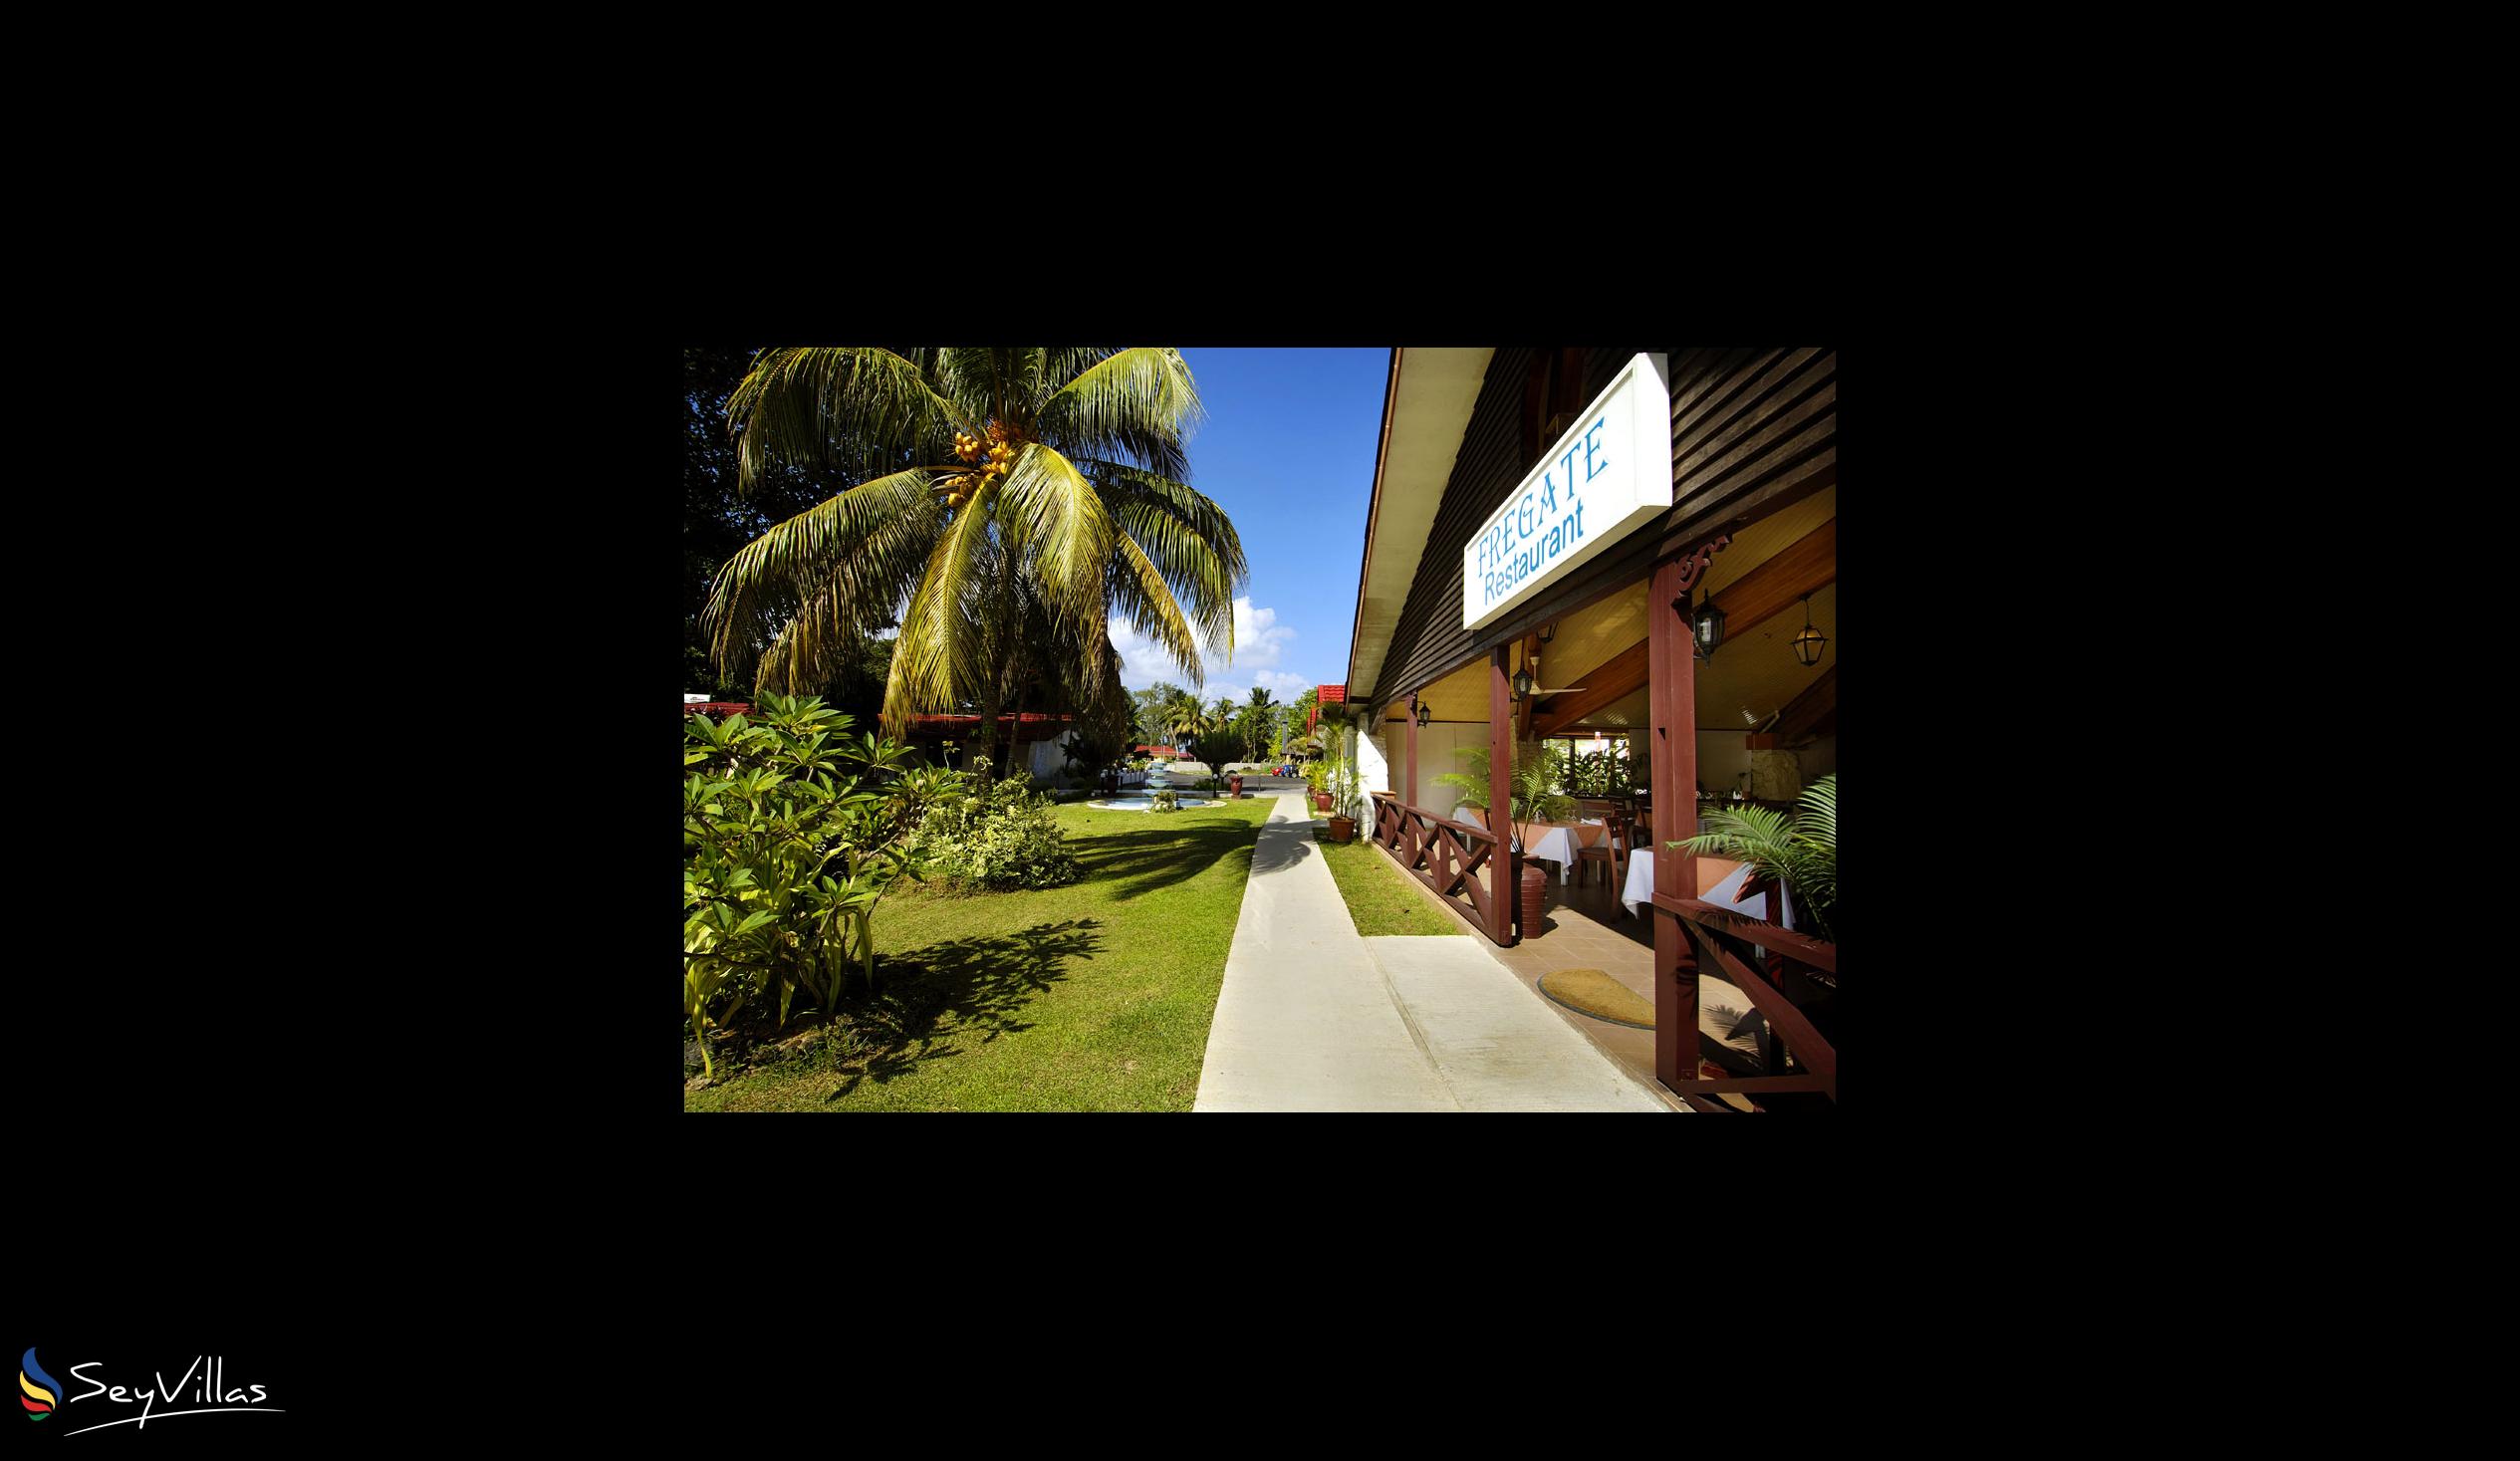 Photo 10: Berjaya Praslin Resort - Outdoor area - Praslin (Seychelles)